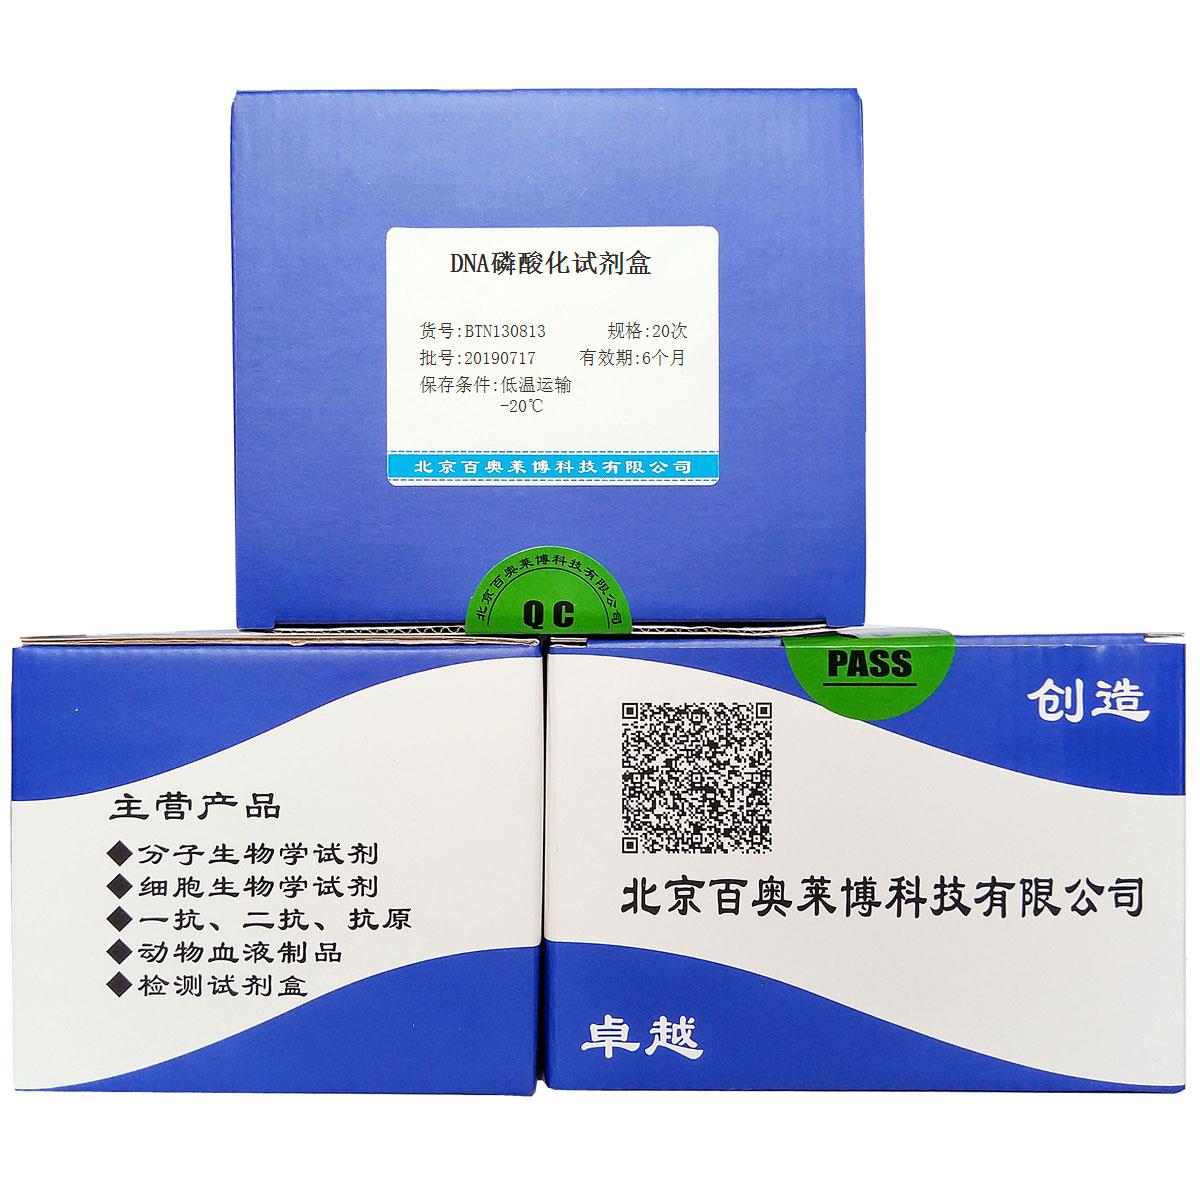 DNA磷酸化试剂盒北京厂家